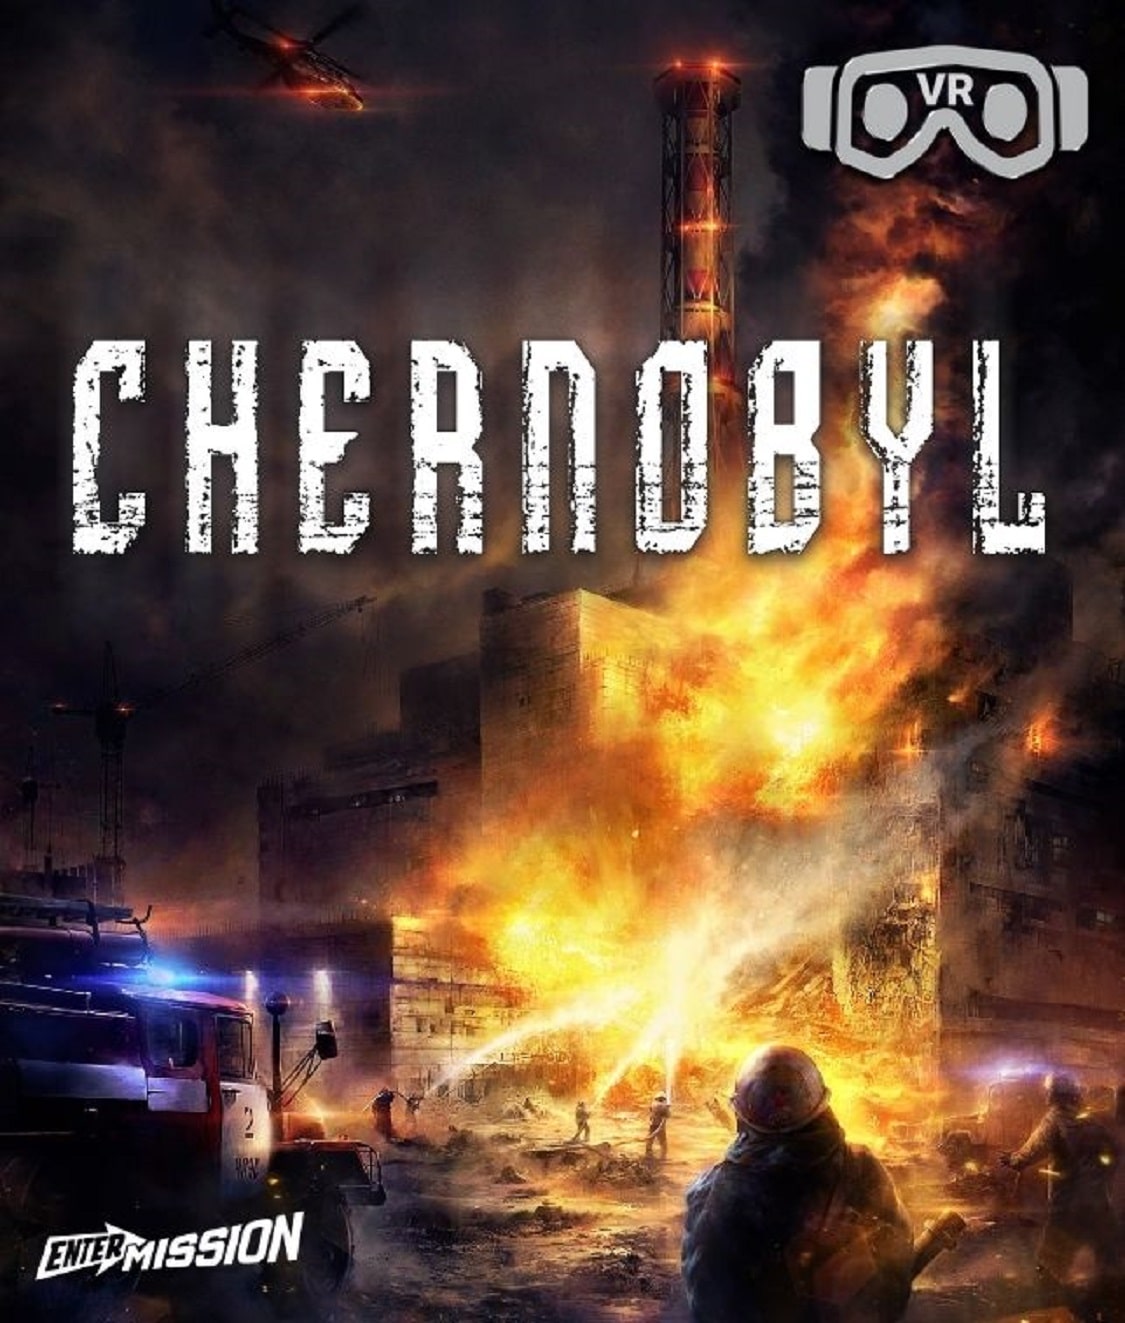 Chernobyl-Entermission Virtual Reality Escape Room-1125x1323-VR